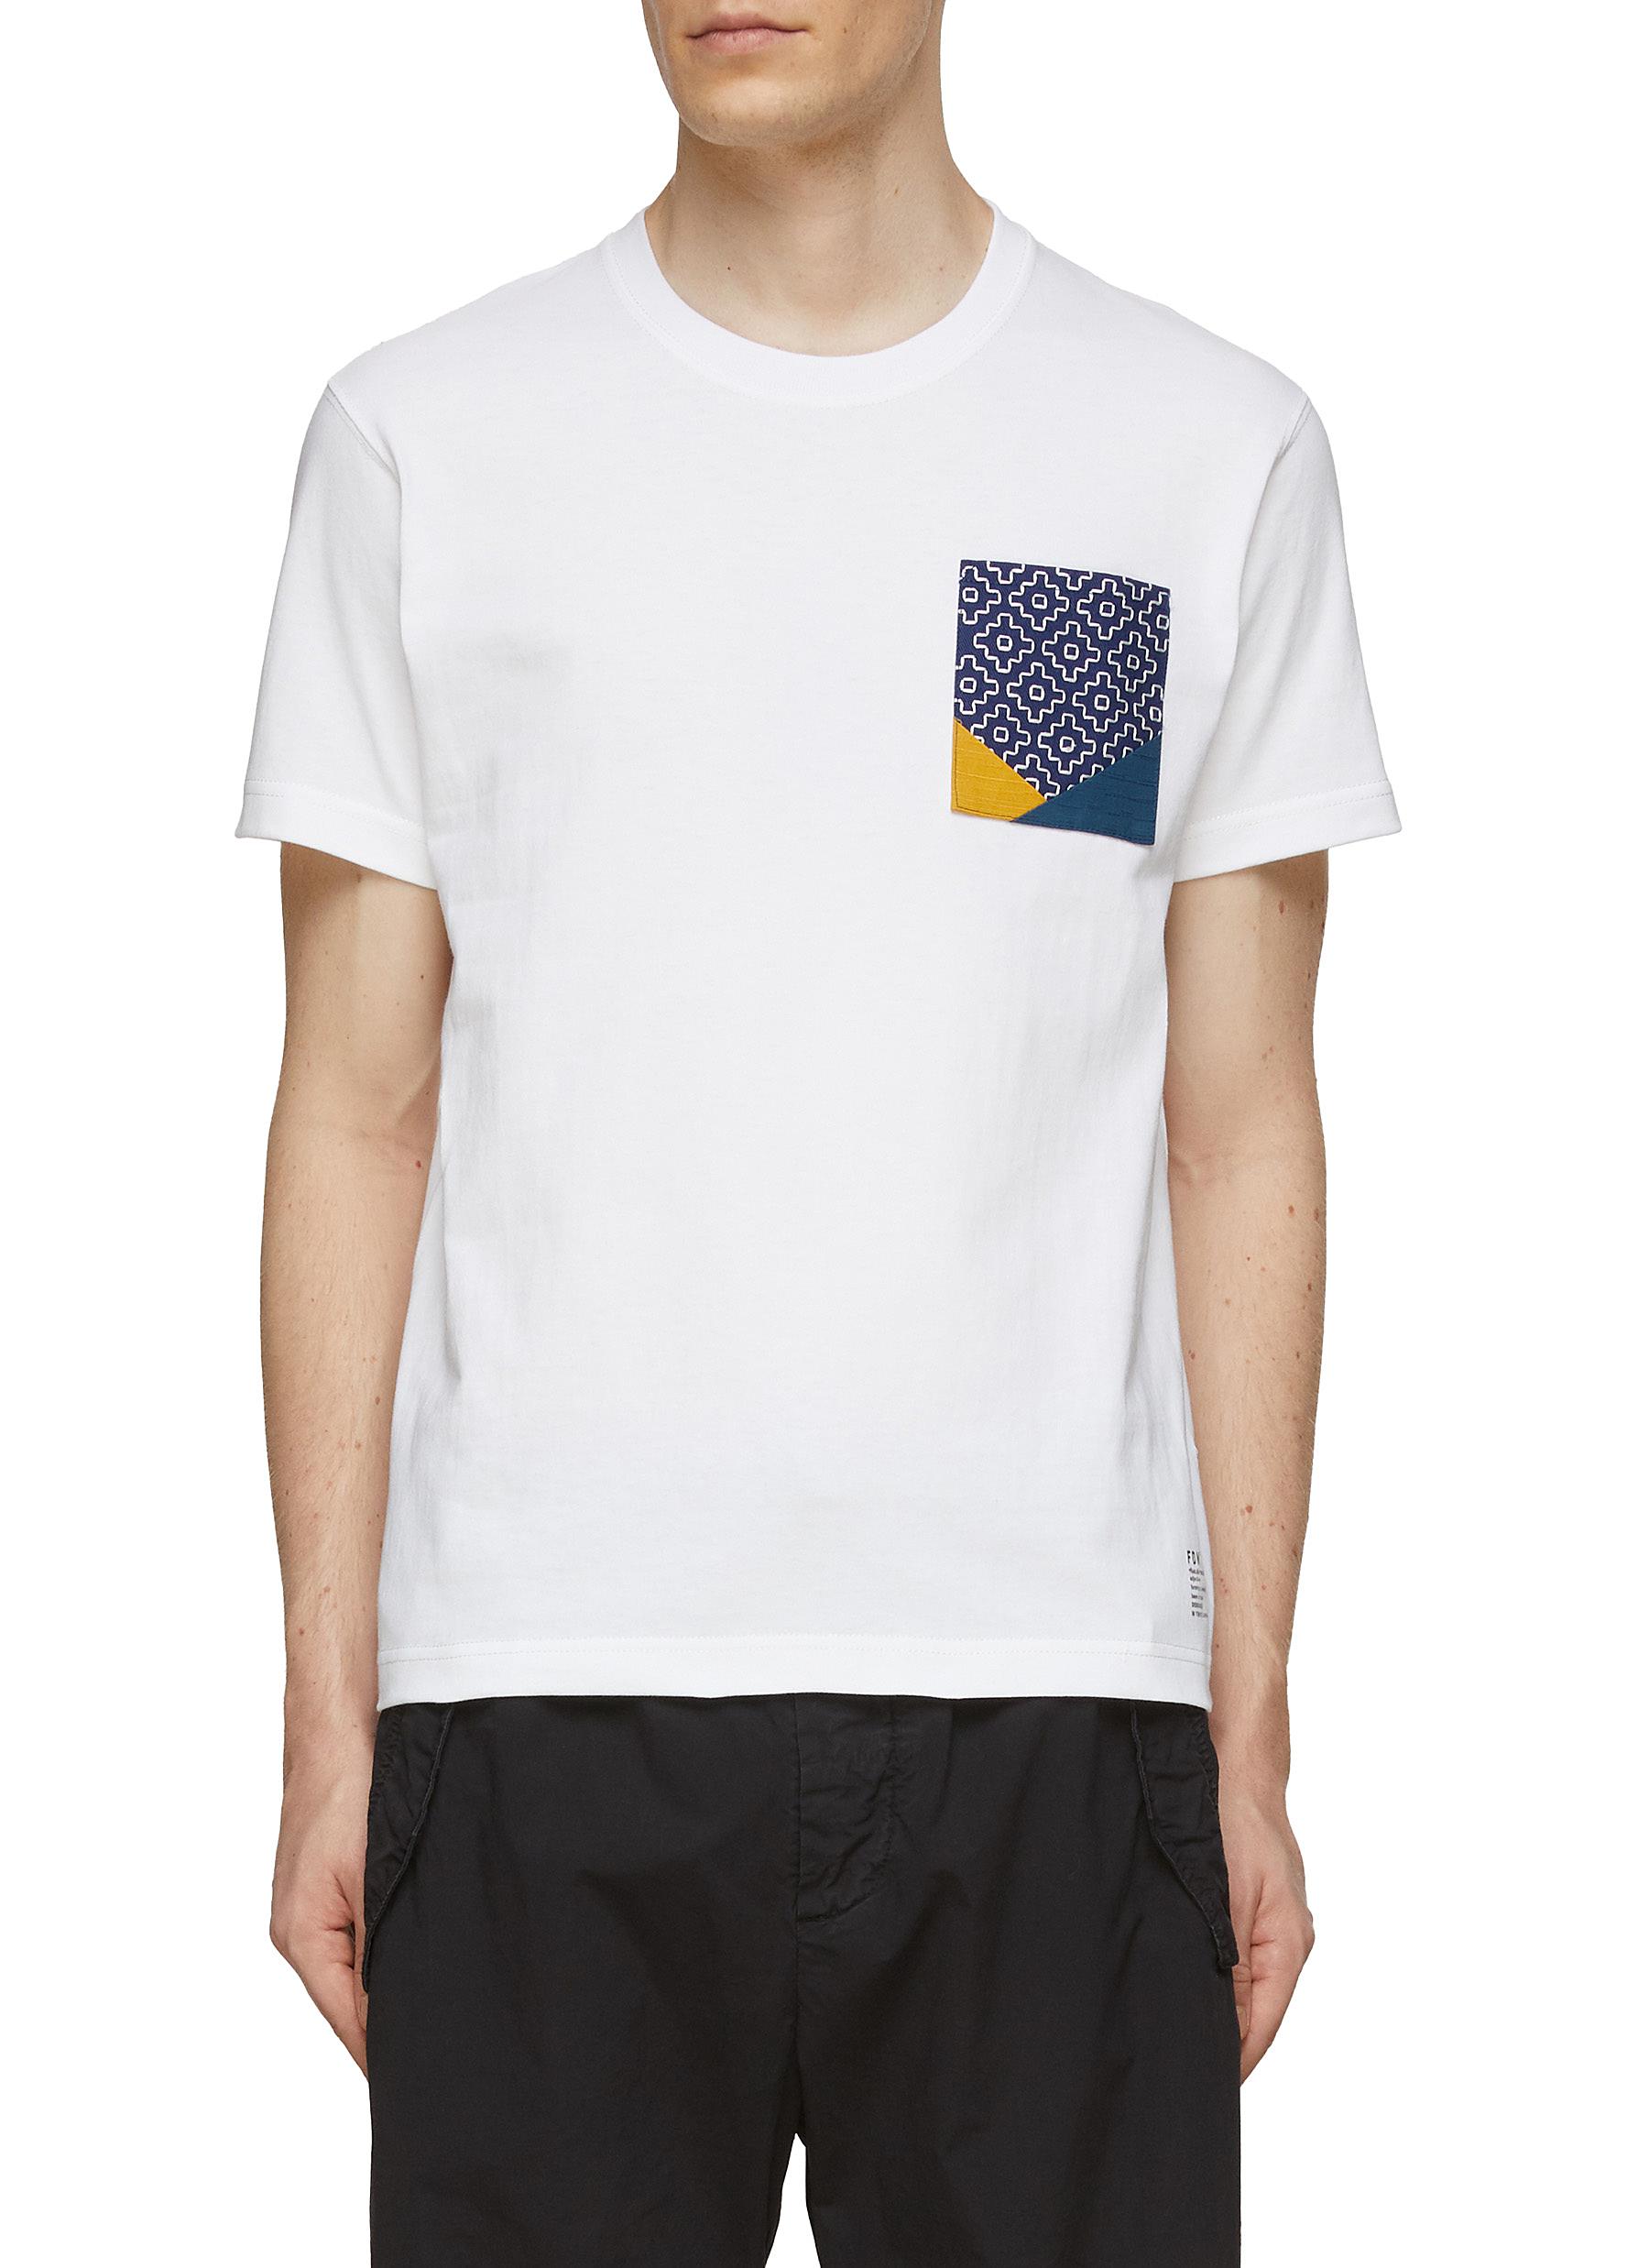 Origami Pocket T-Shirt